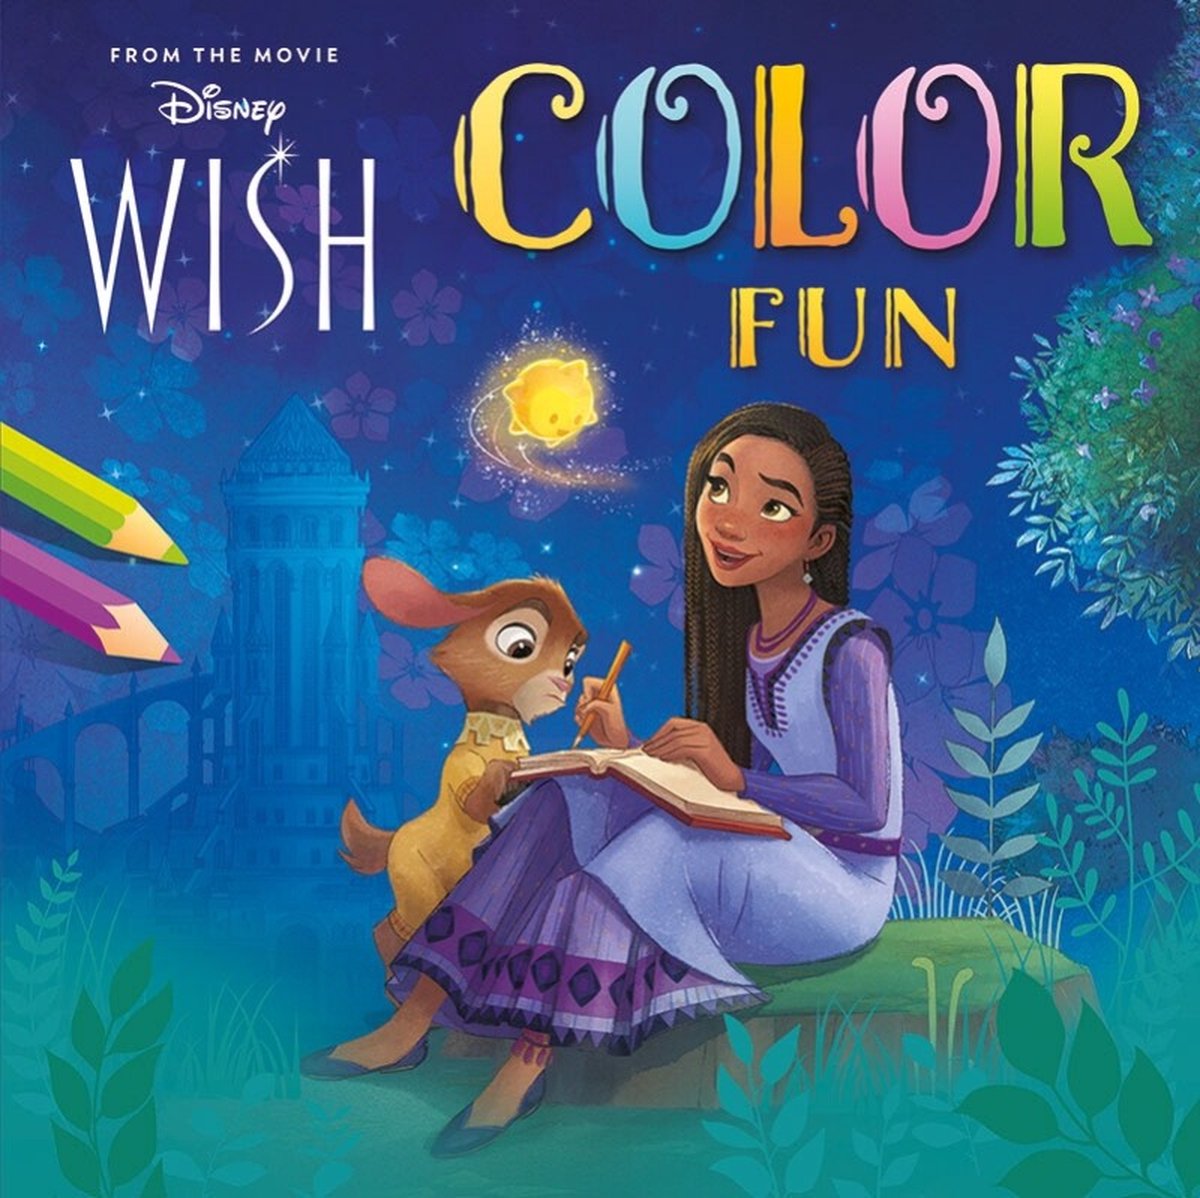 van kleurboek - wish color fun- livre à colorier